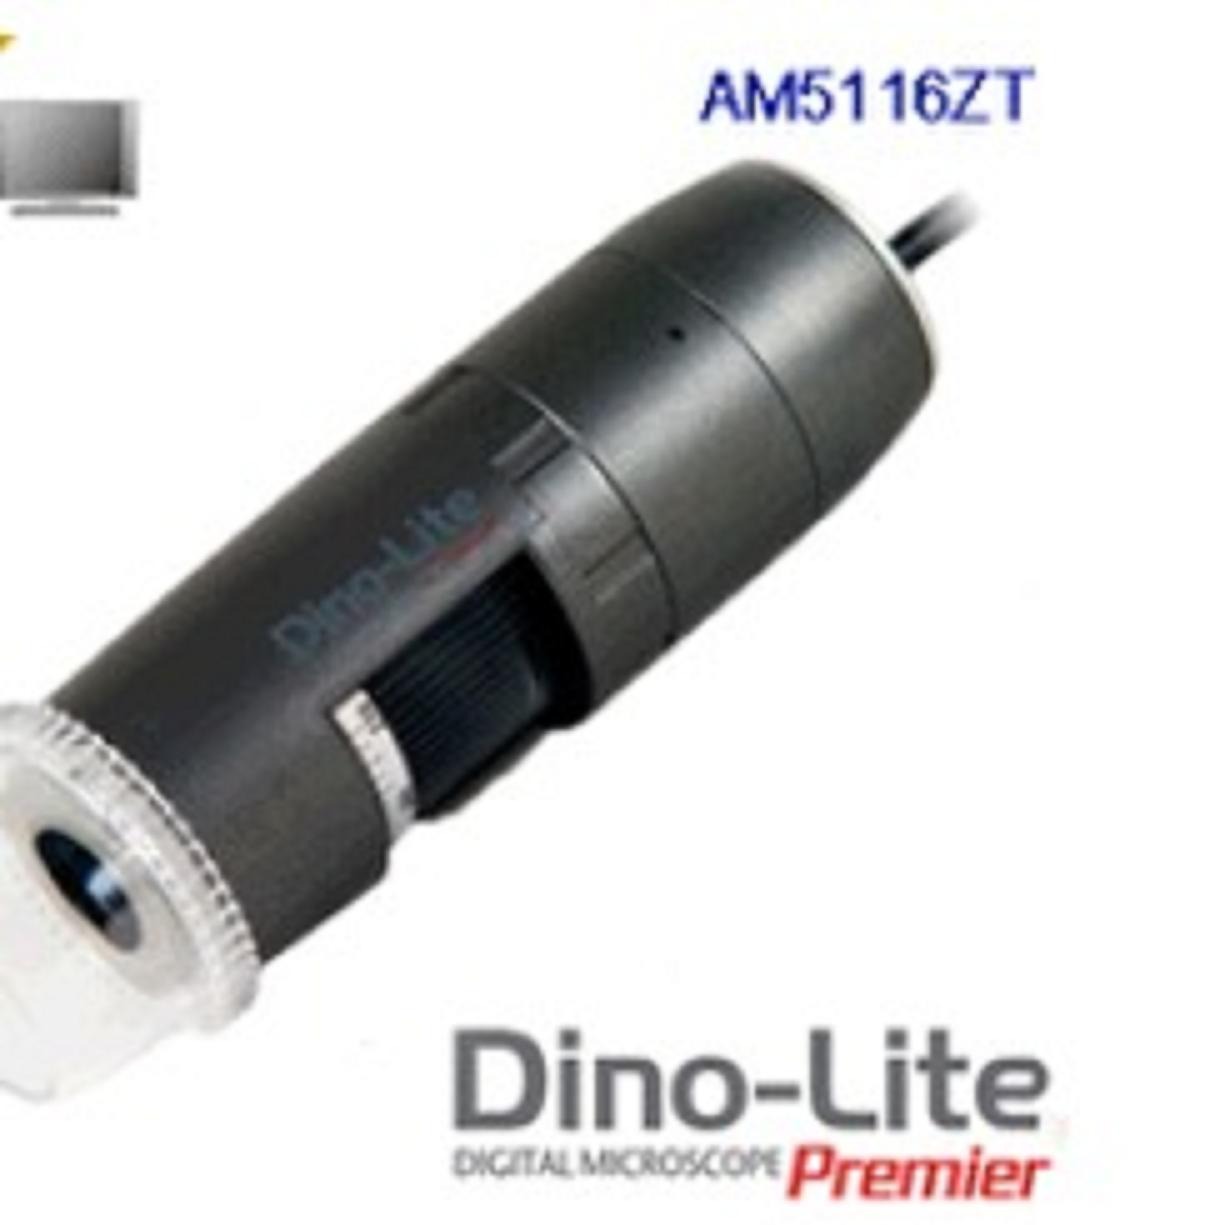 dino-lite手持式数码显微镜AM5116ZT